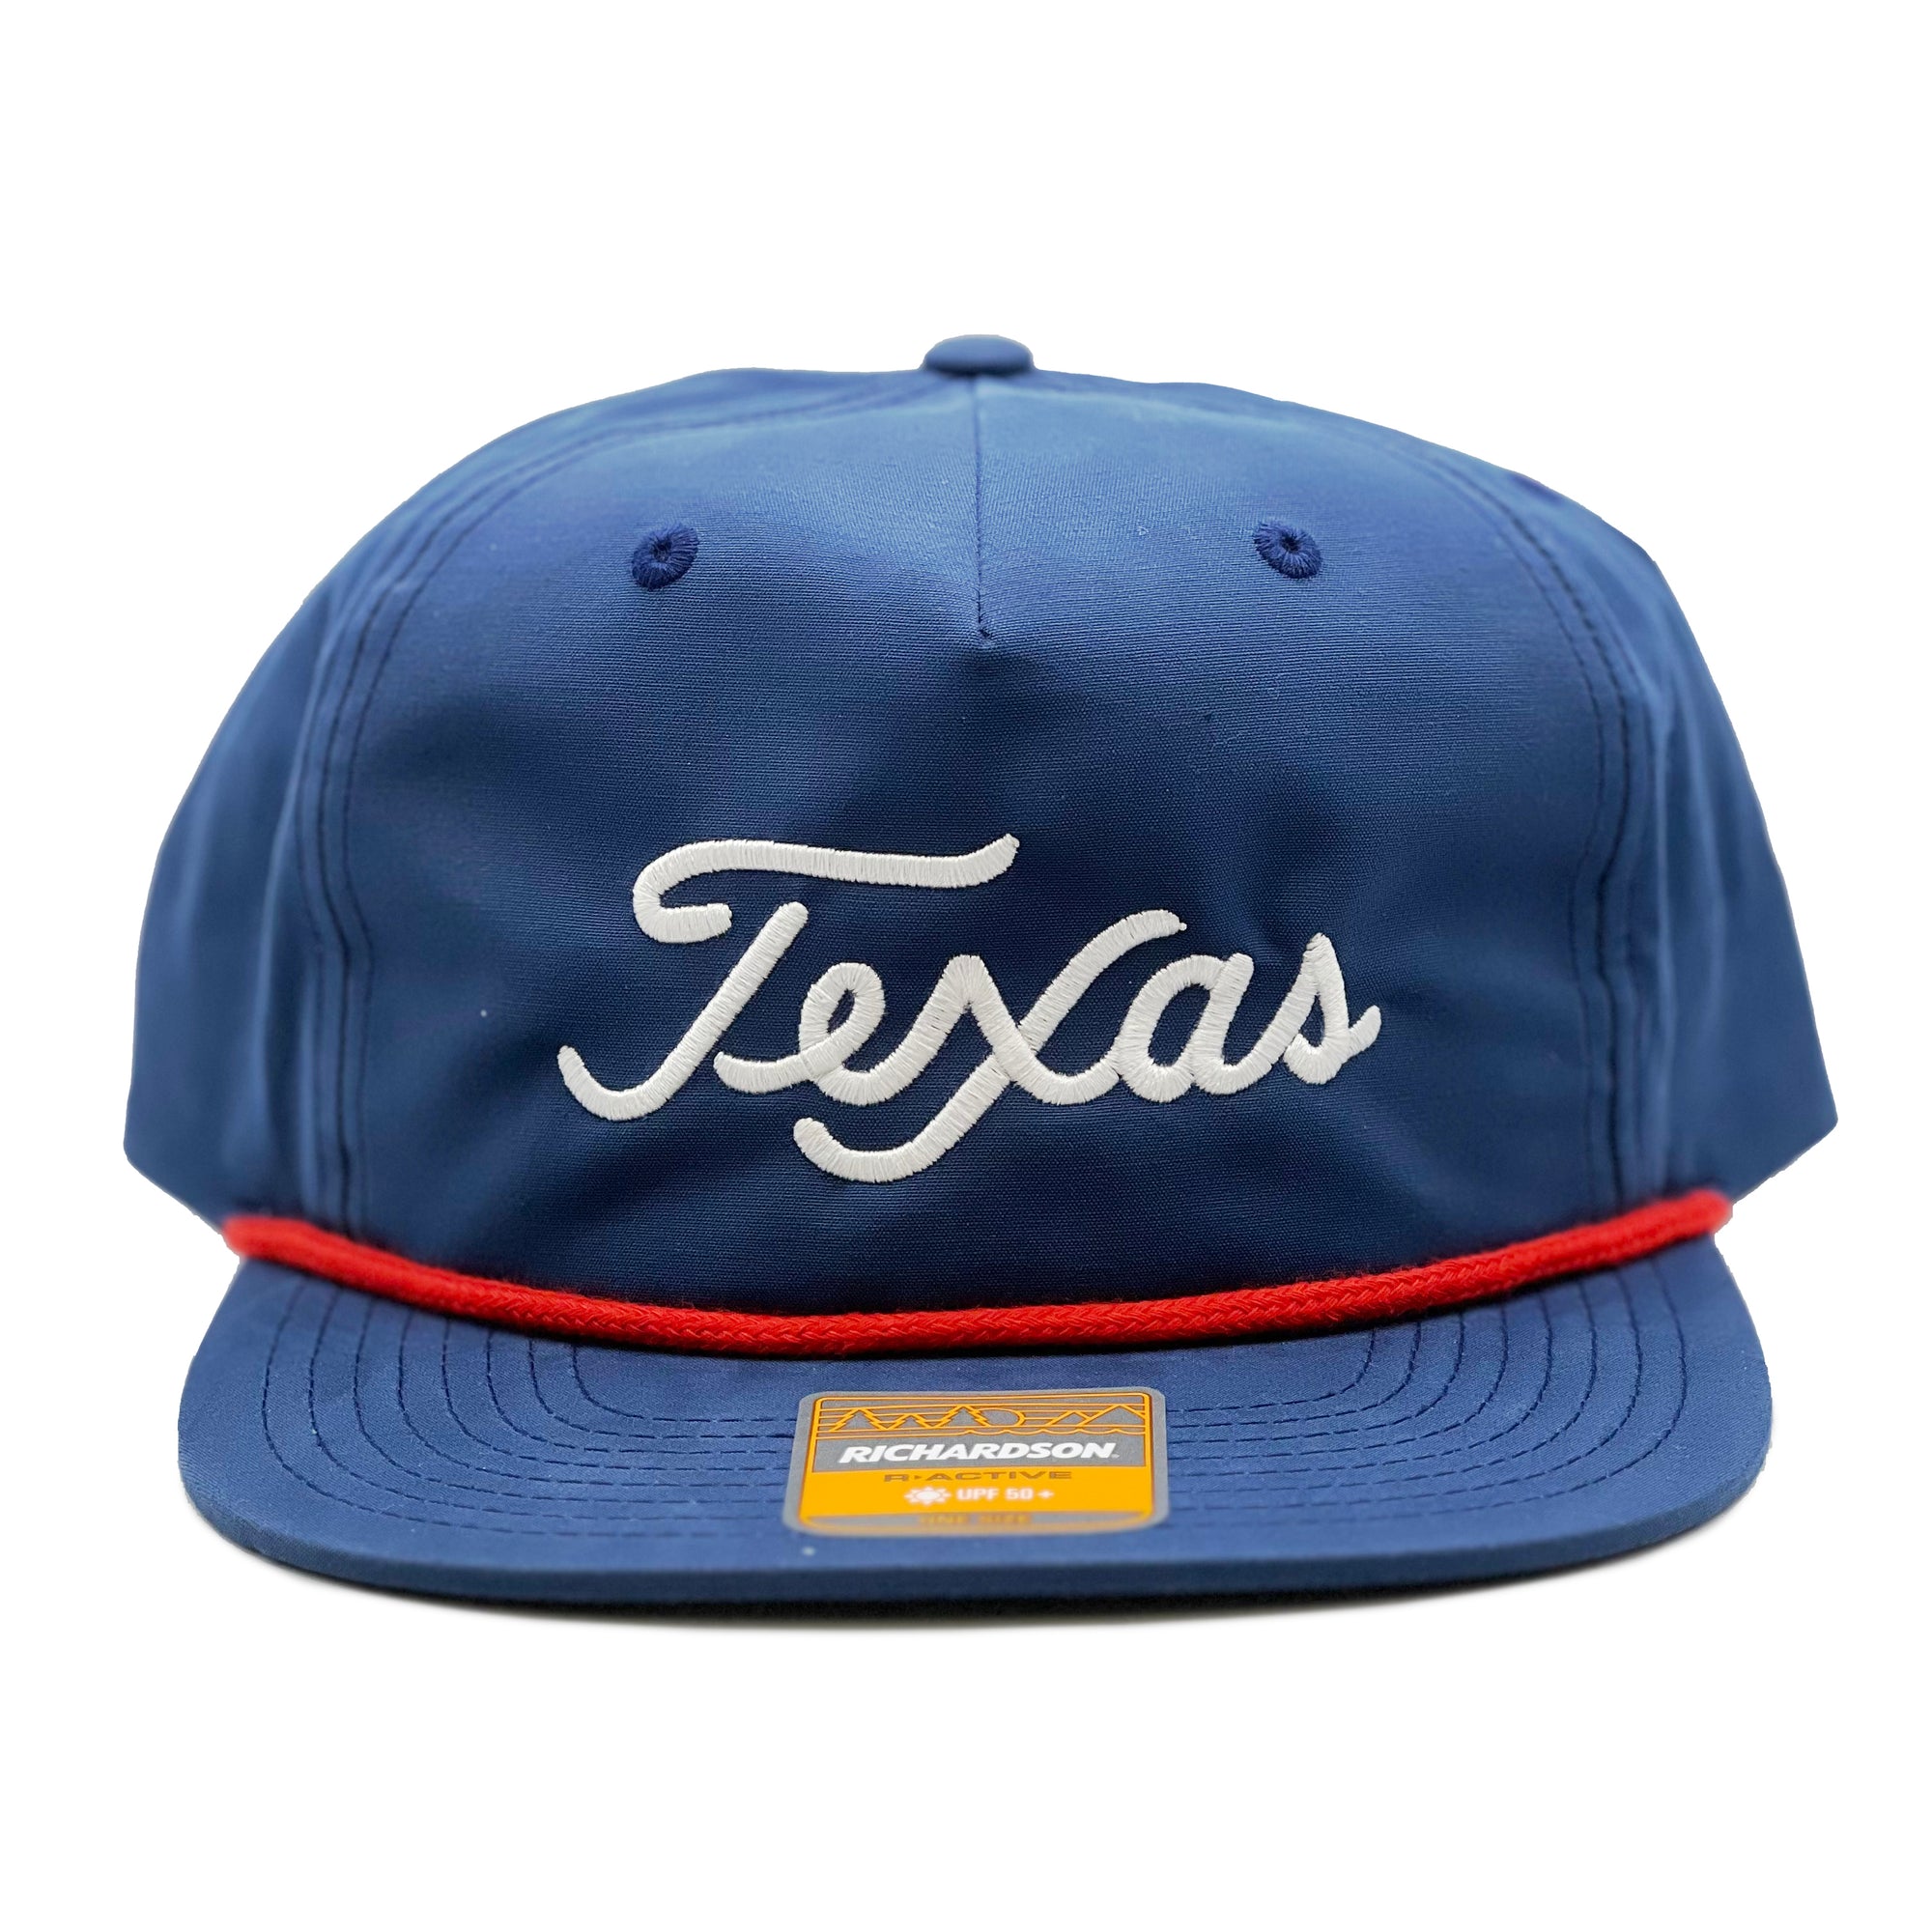 Script Texas Hat (Navy/Red)